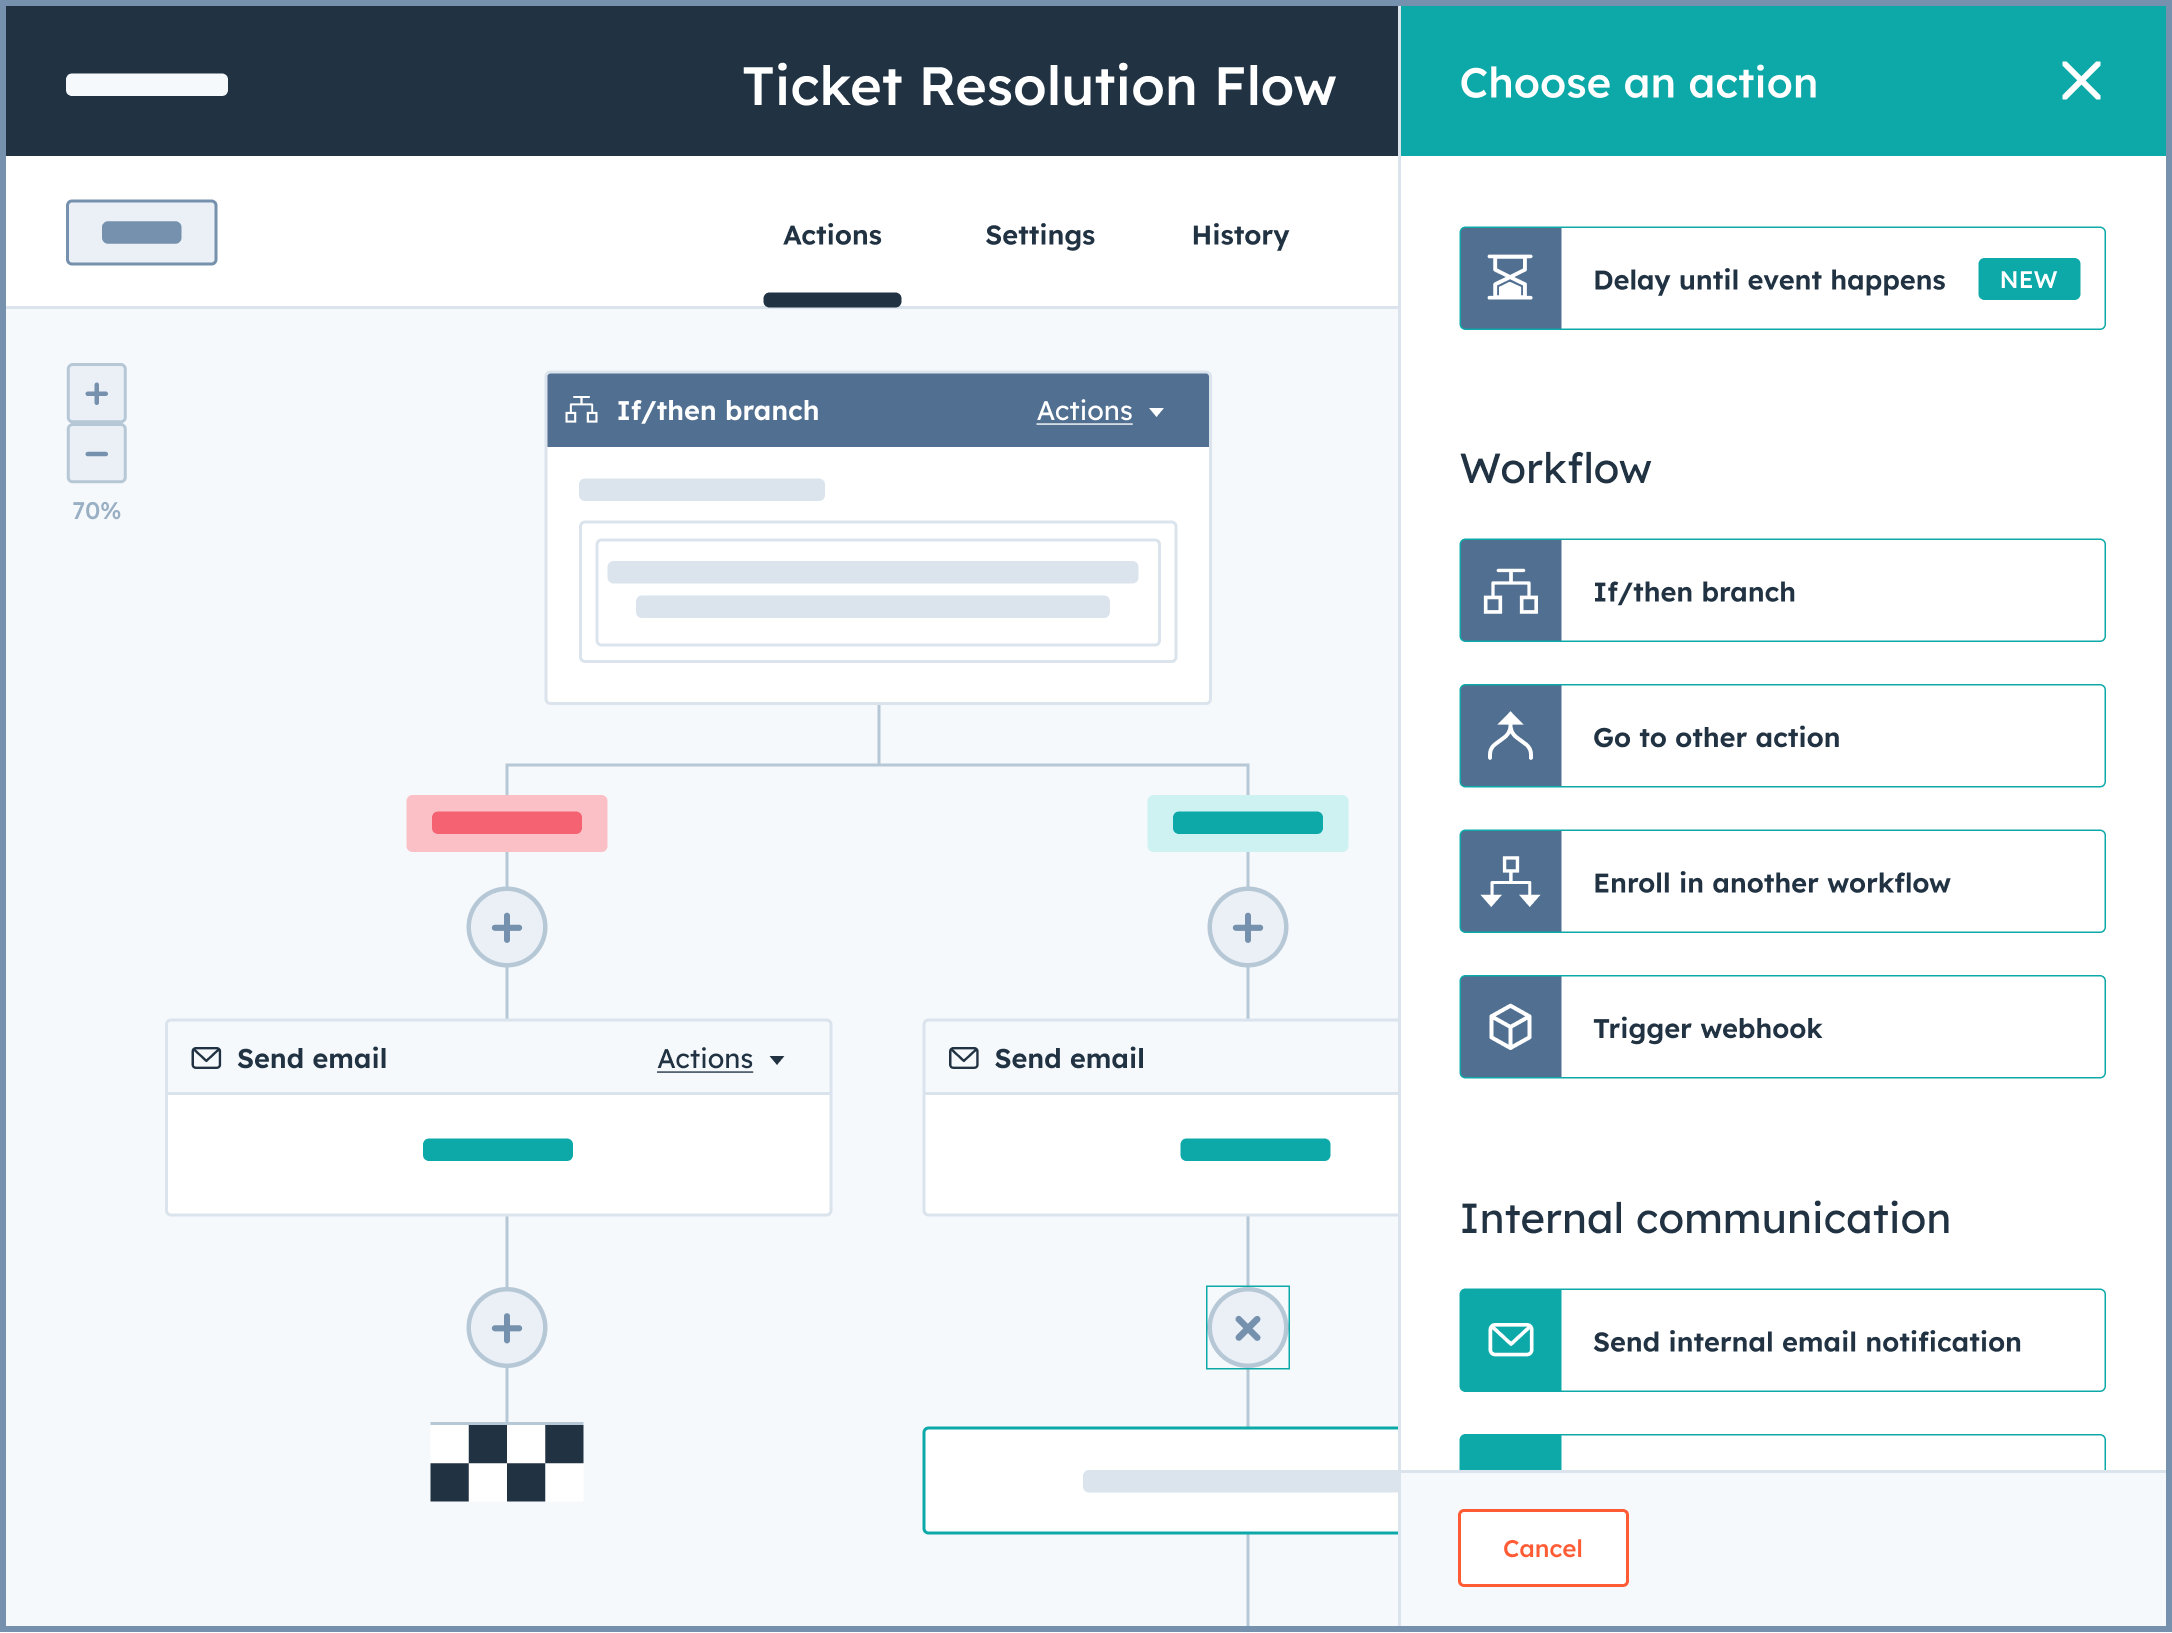 Hubspot's help desk tool showing a ticket resolution workflow